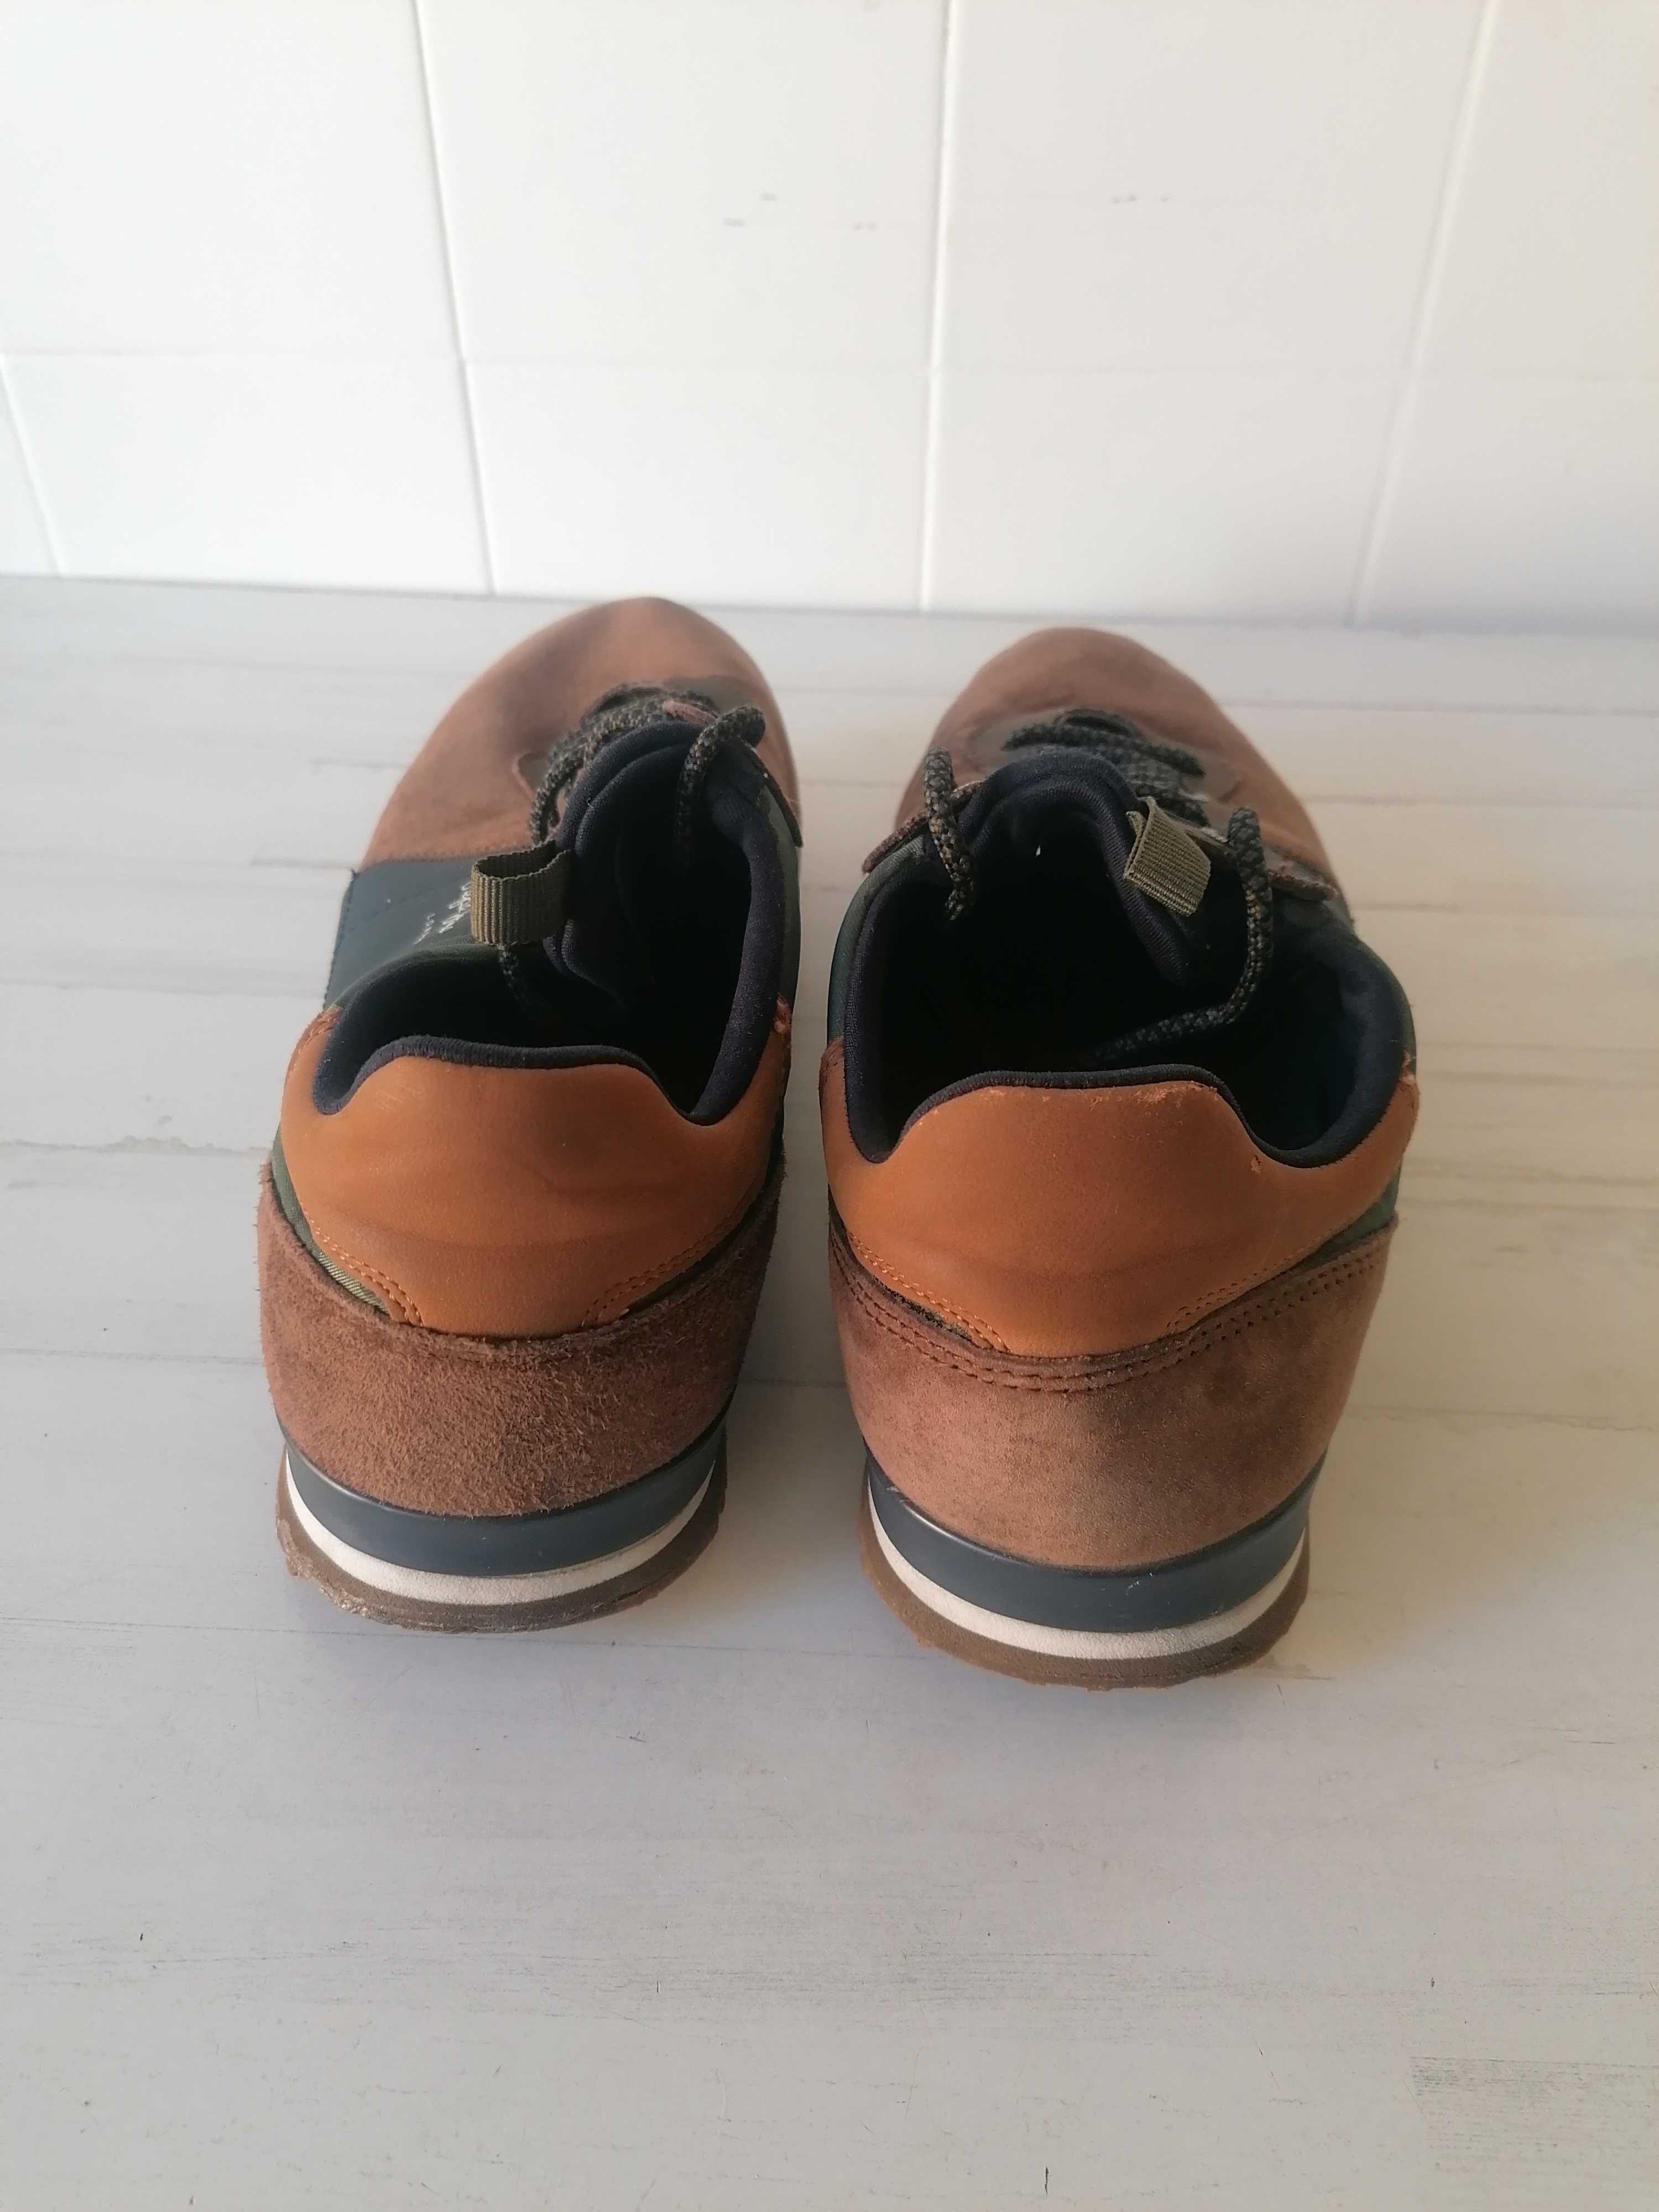 Sapatilhas Ténis Pepe Jeans London - Tamanho 43 - Original Sneakers